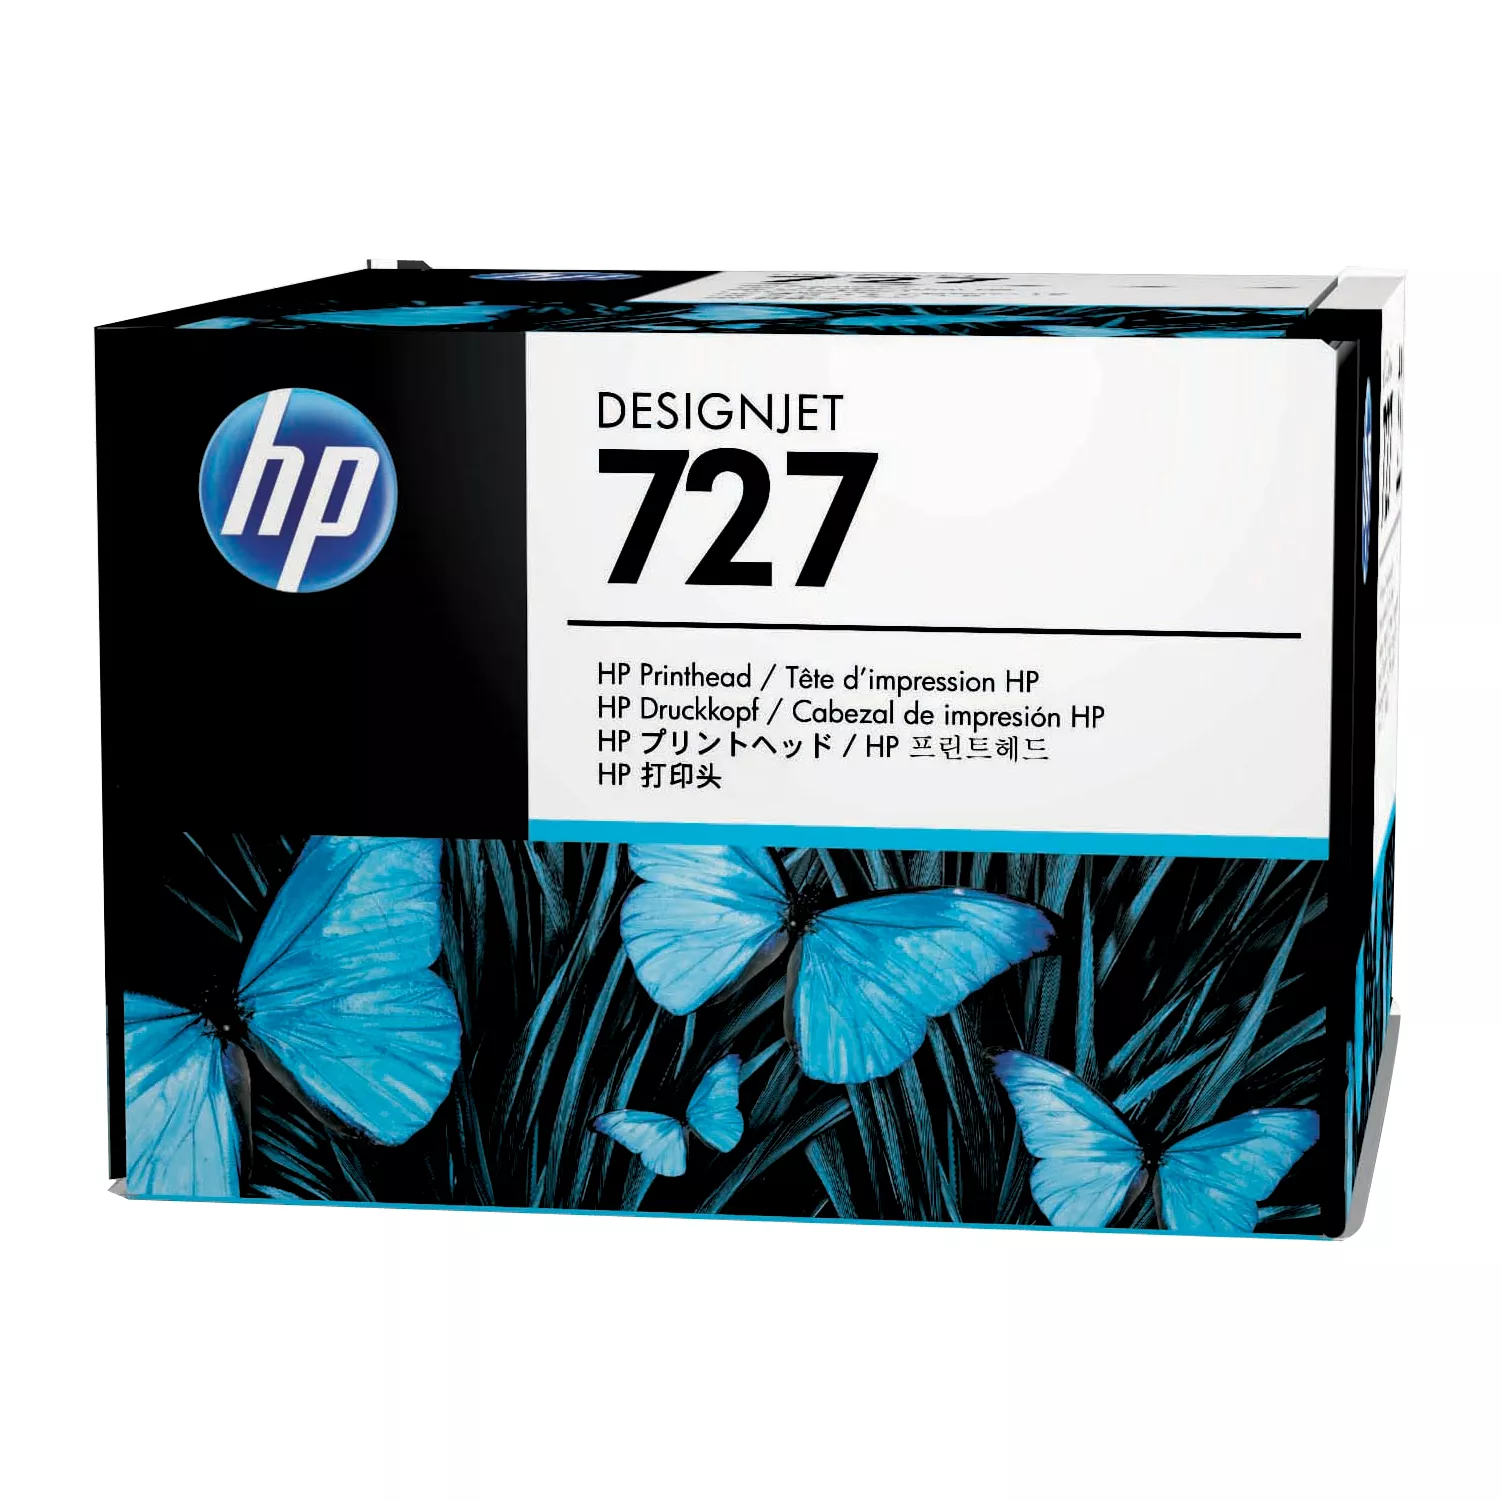 Vente HP 727 original printhead B3P06A black and colour HP au meilleur prix - visuel 2